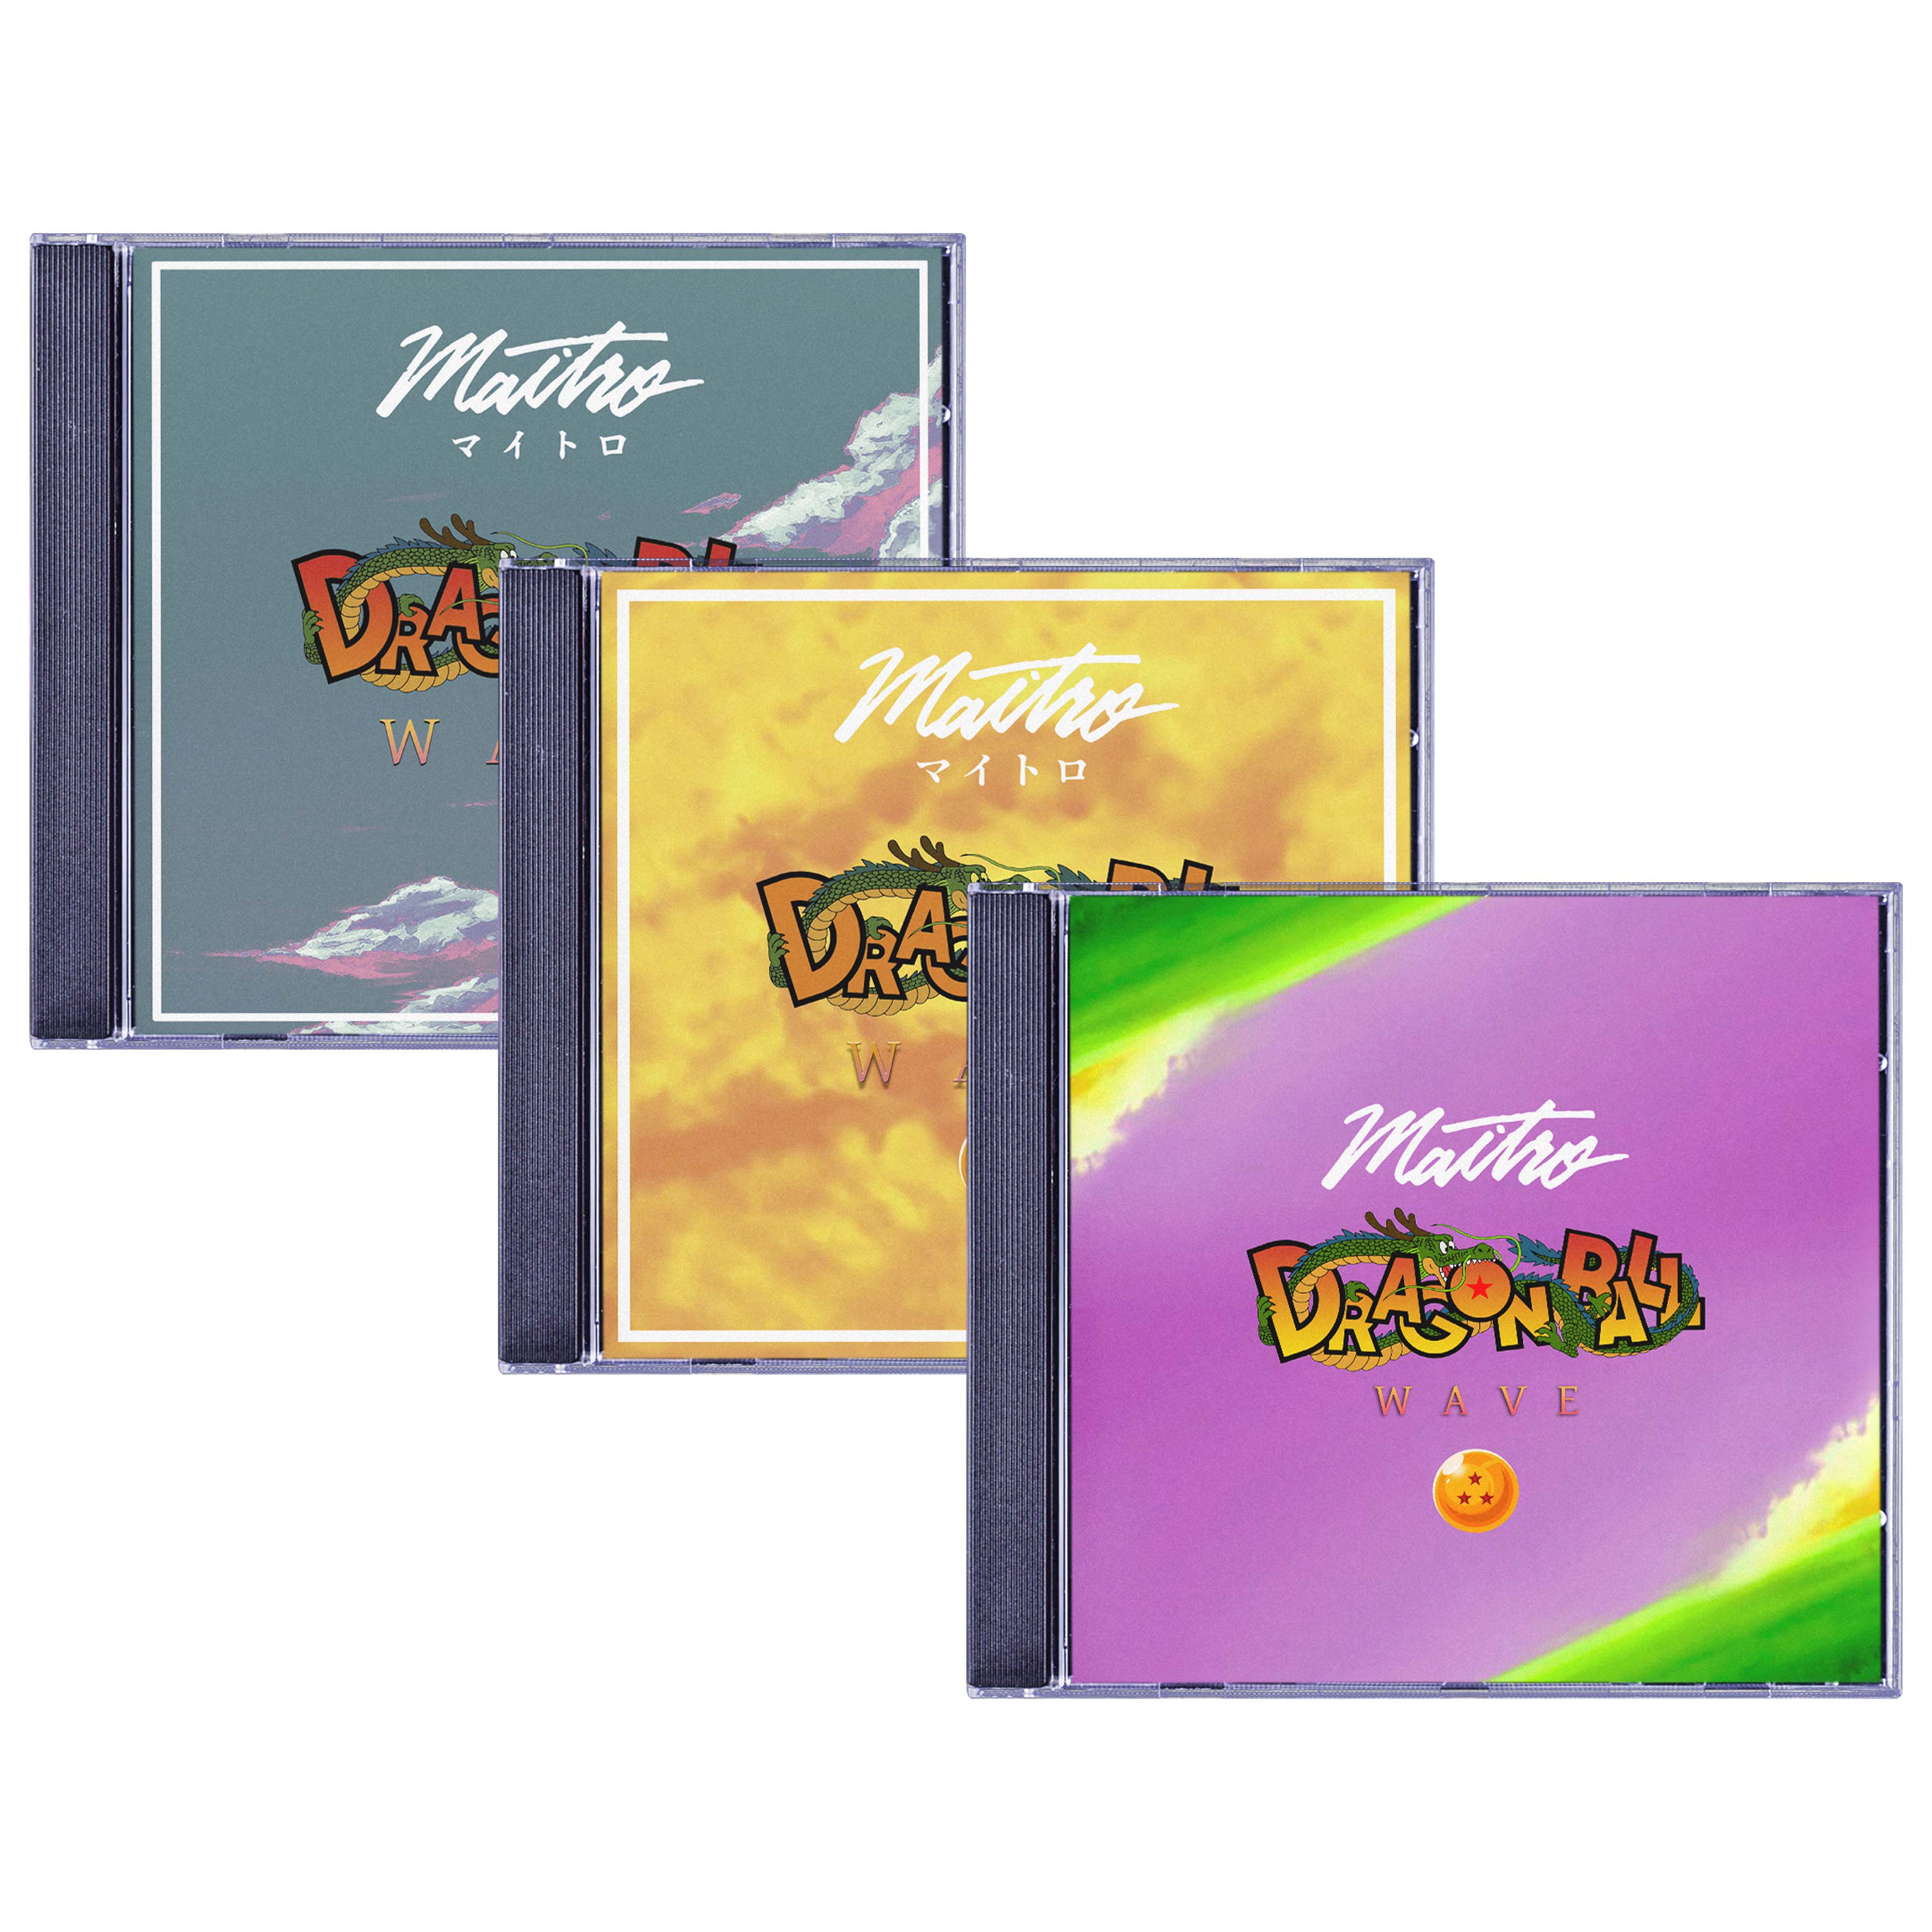 DRAGONBALL WAVE MAITRO VINYL LP レア盤 | labiela.com